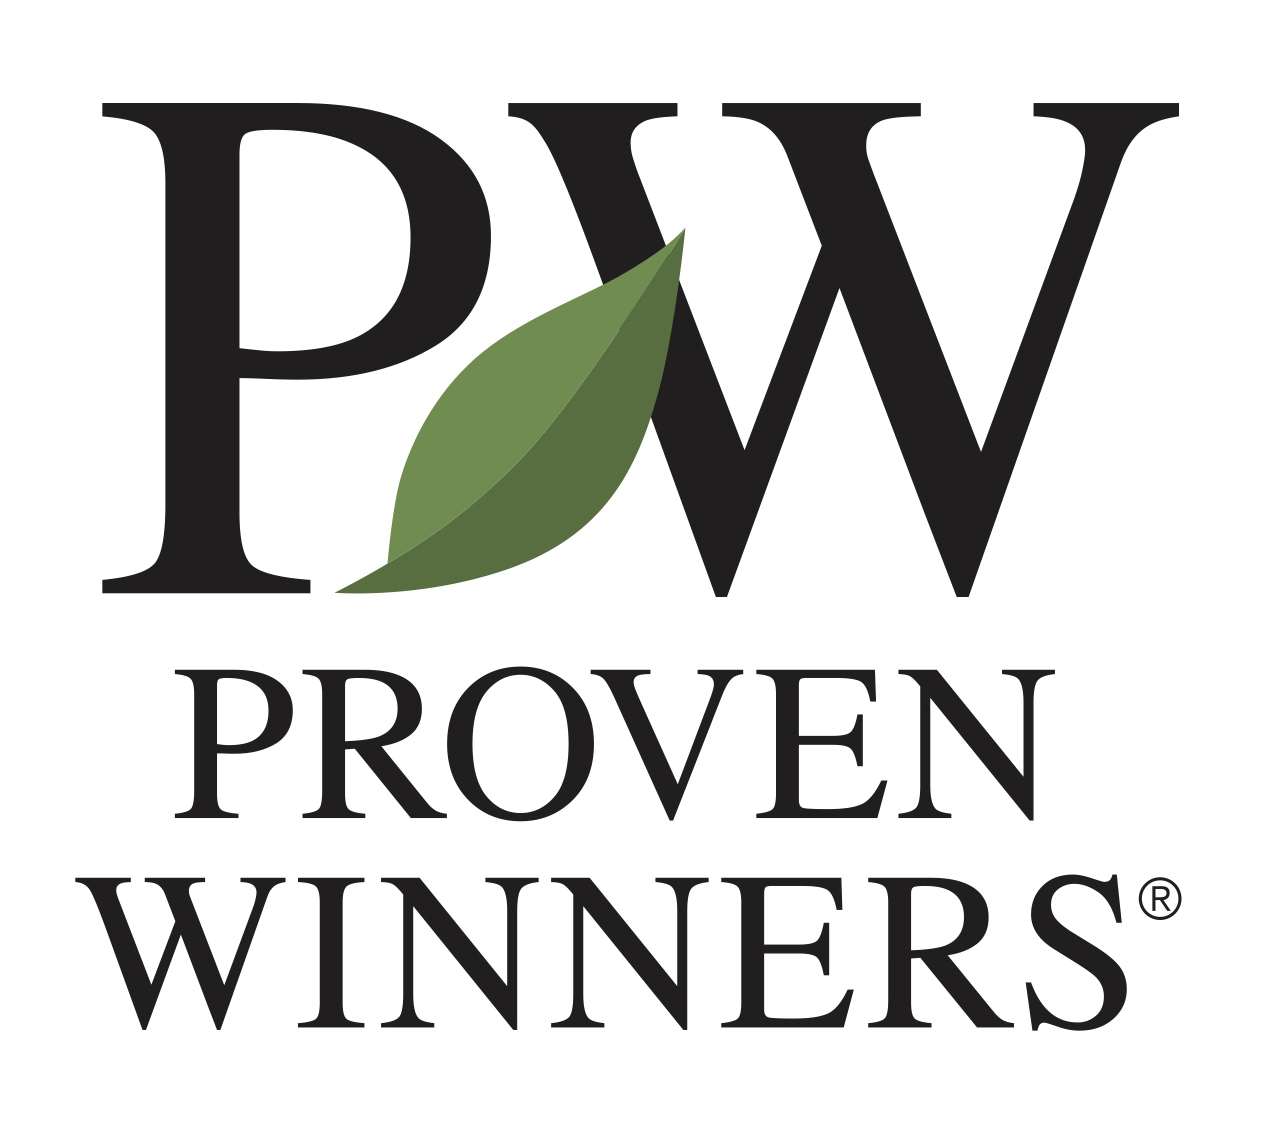 PWLOGO Proven Winners - East Coast Garden Center